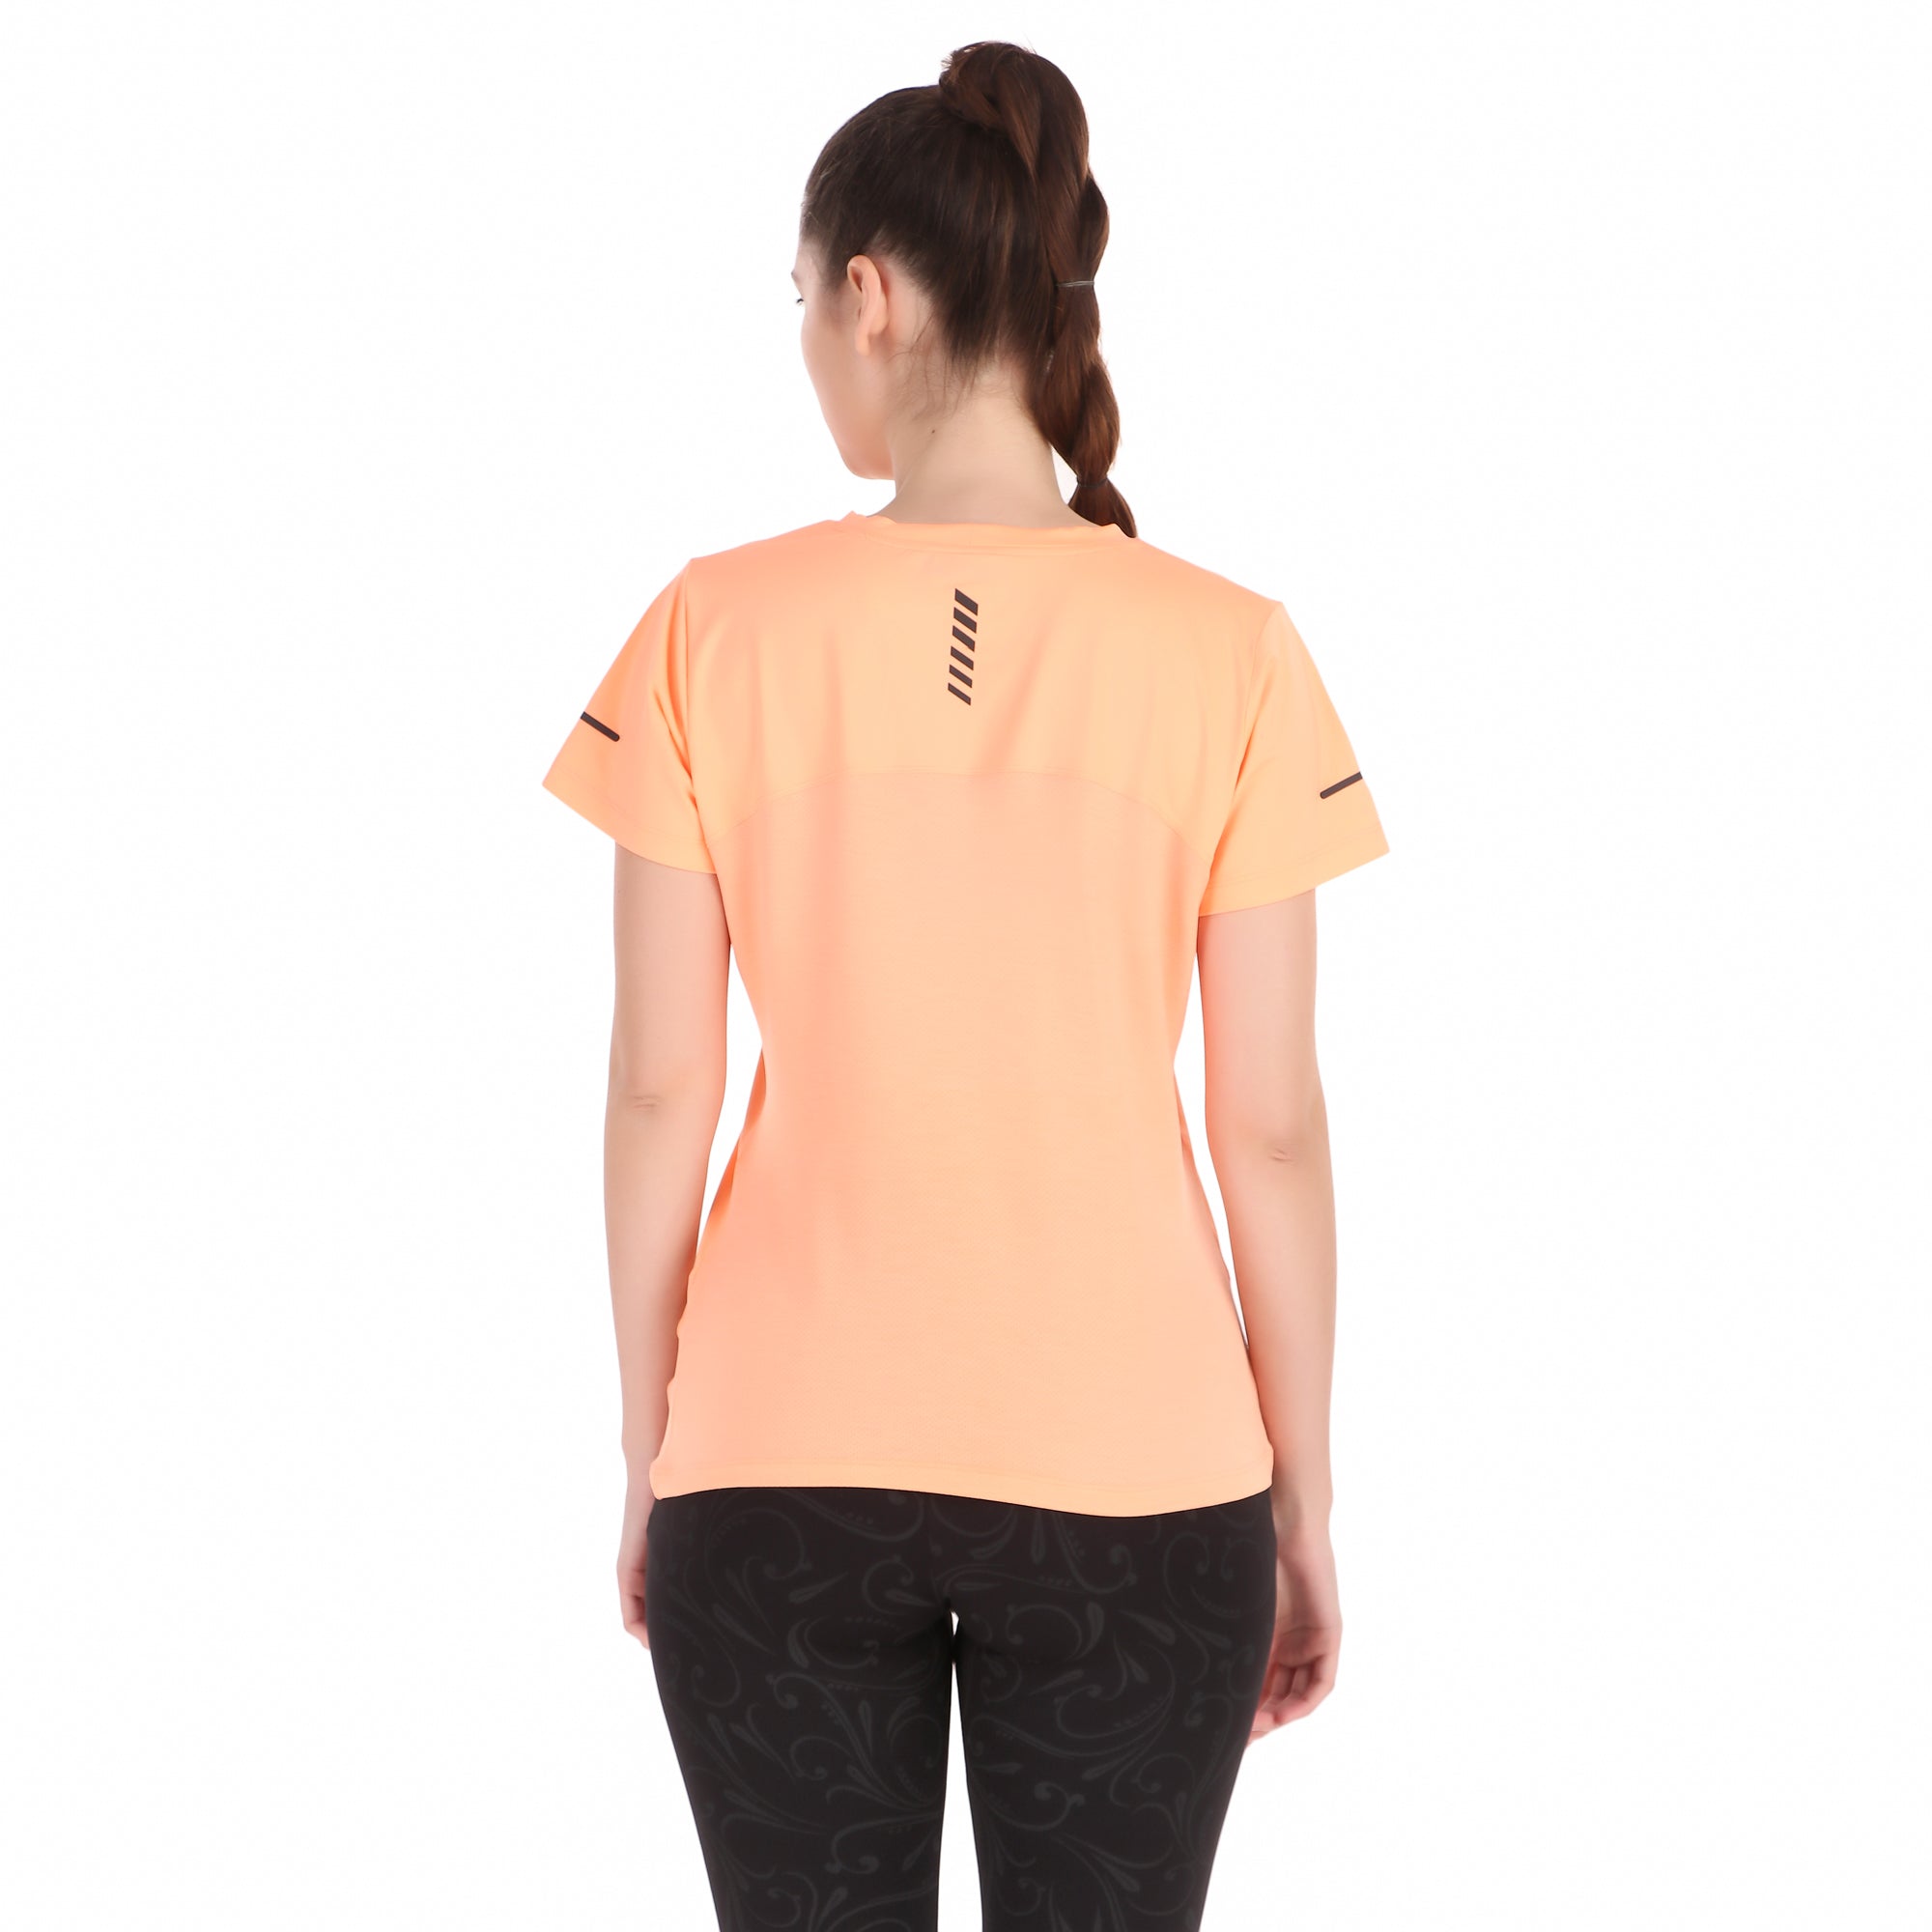 Performance Vent Tshirt For Women (Orange)